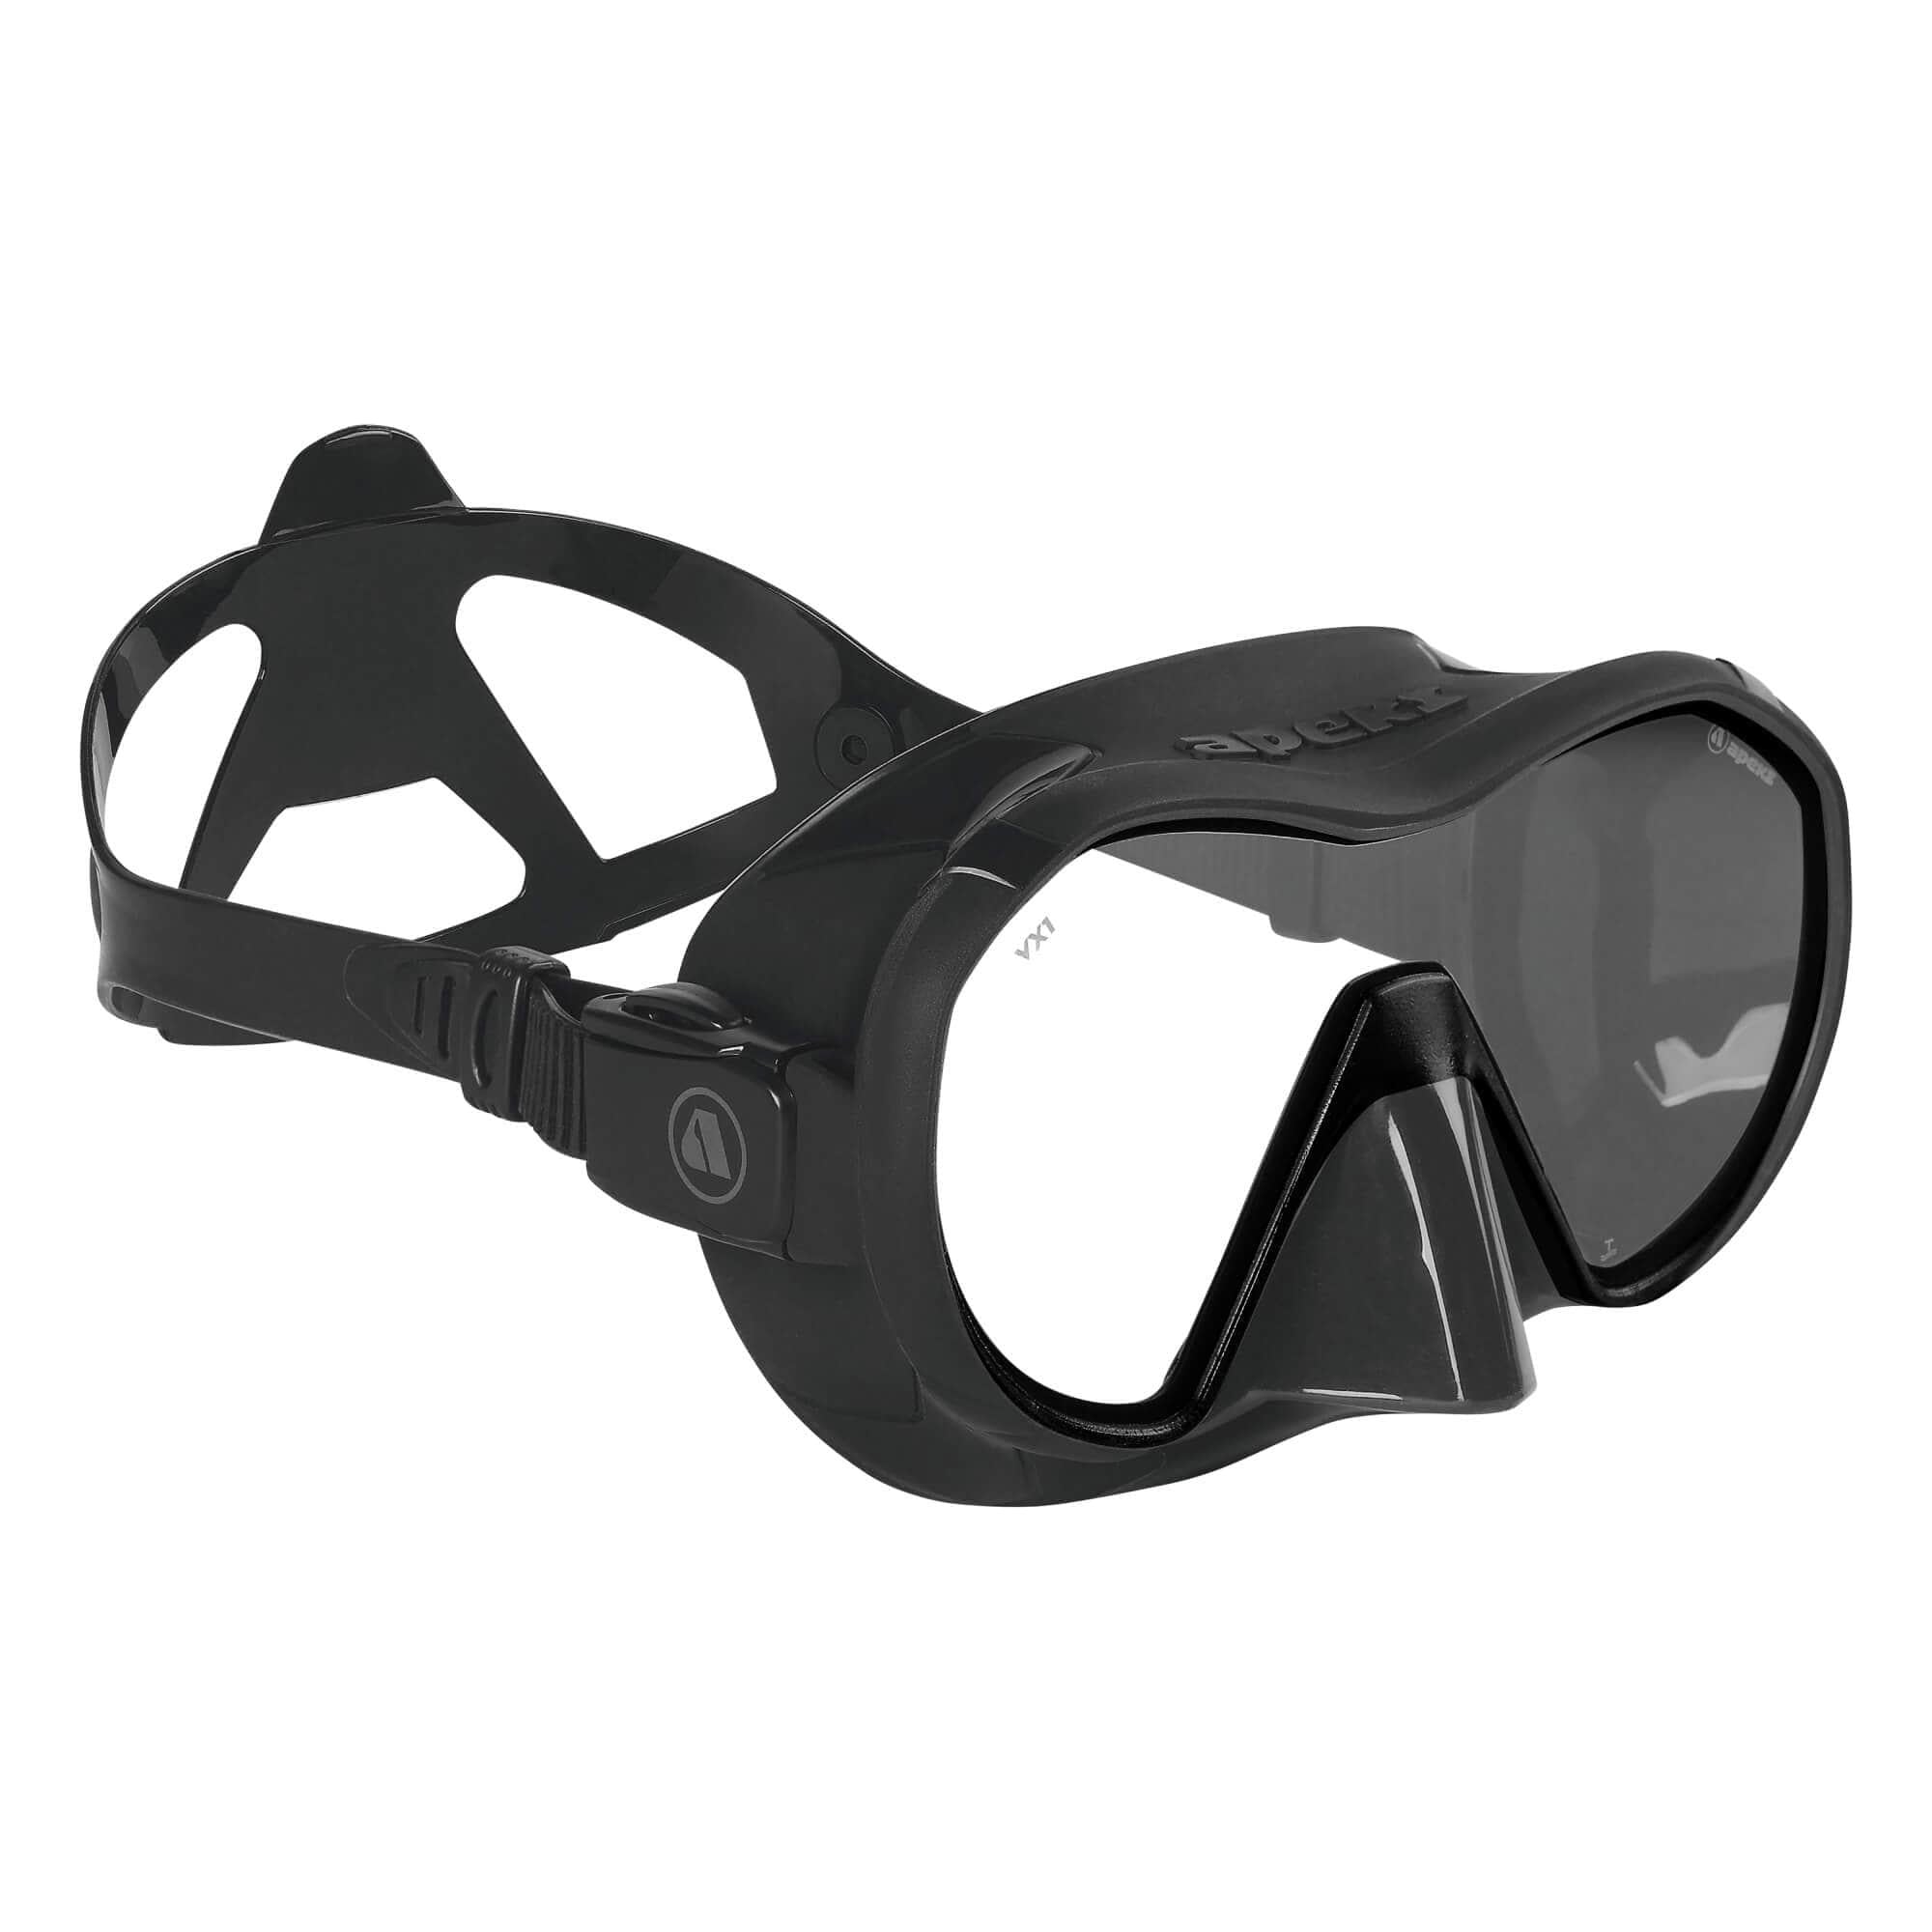 Apeks Single Lens Mask Black / Ultra Clear Apeks VX1 Single Lens Mask